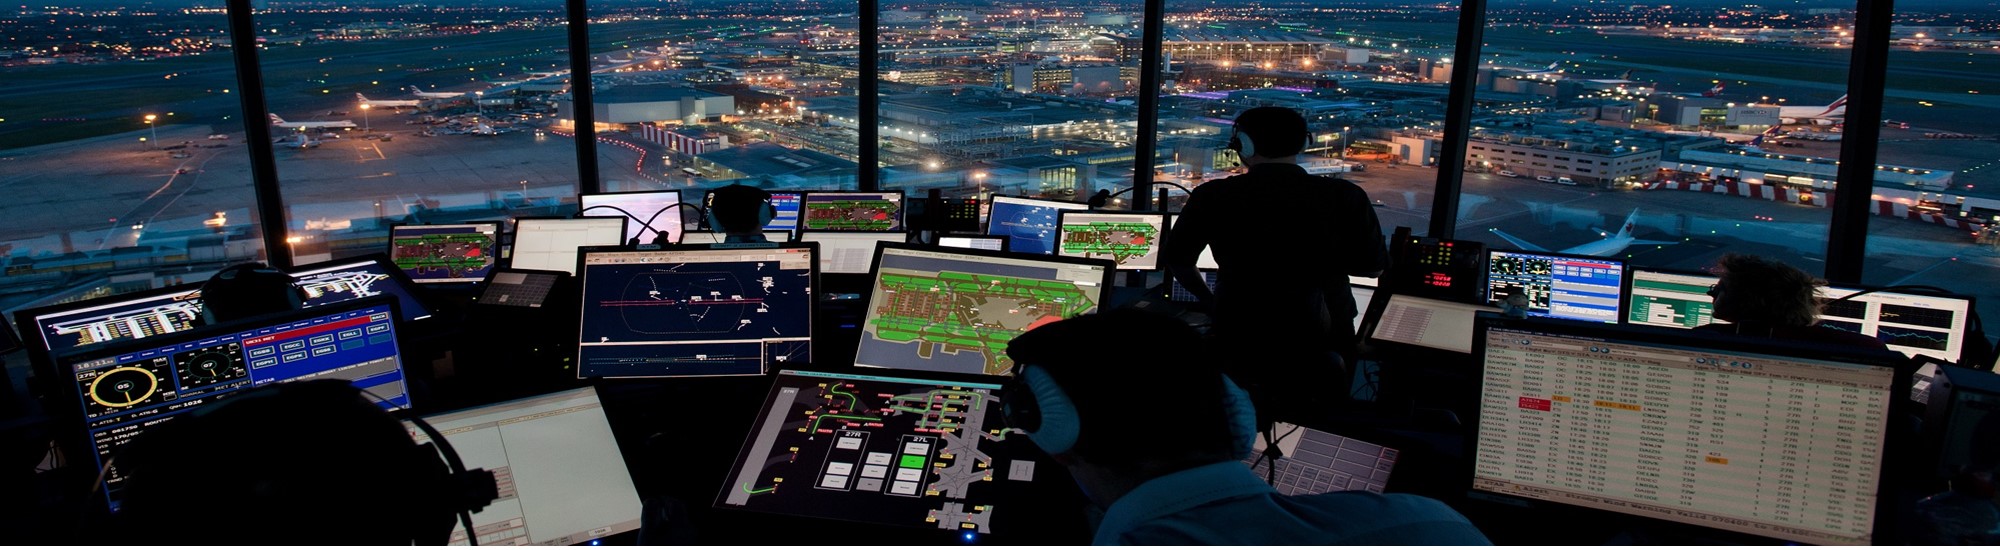 London Heathrow Airport Control Tower